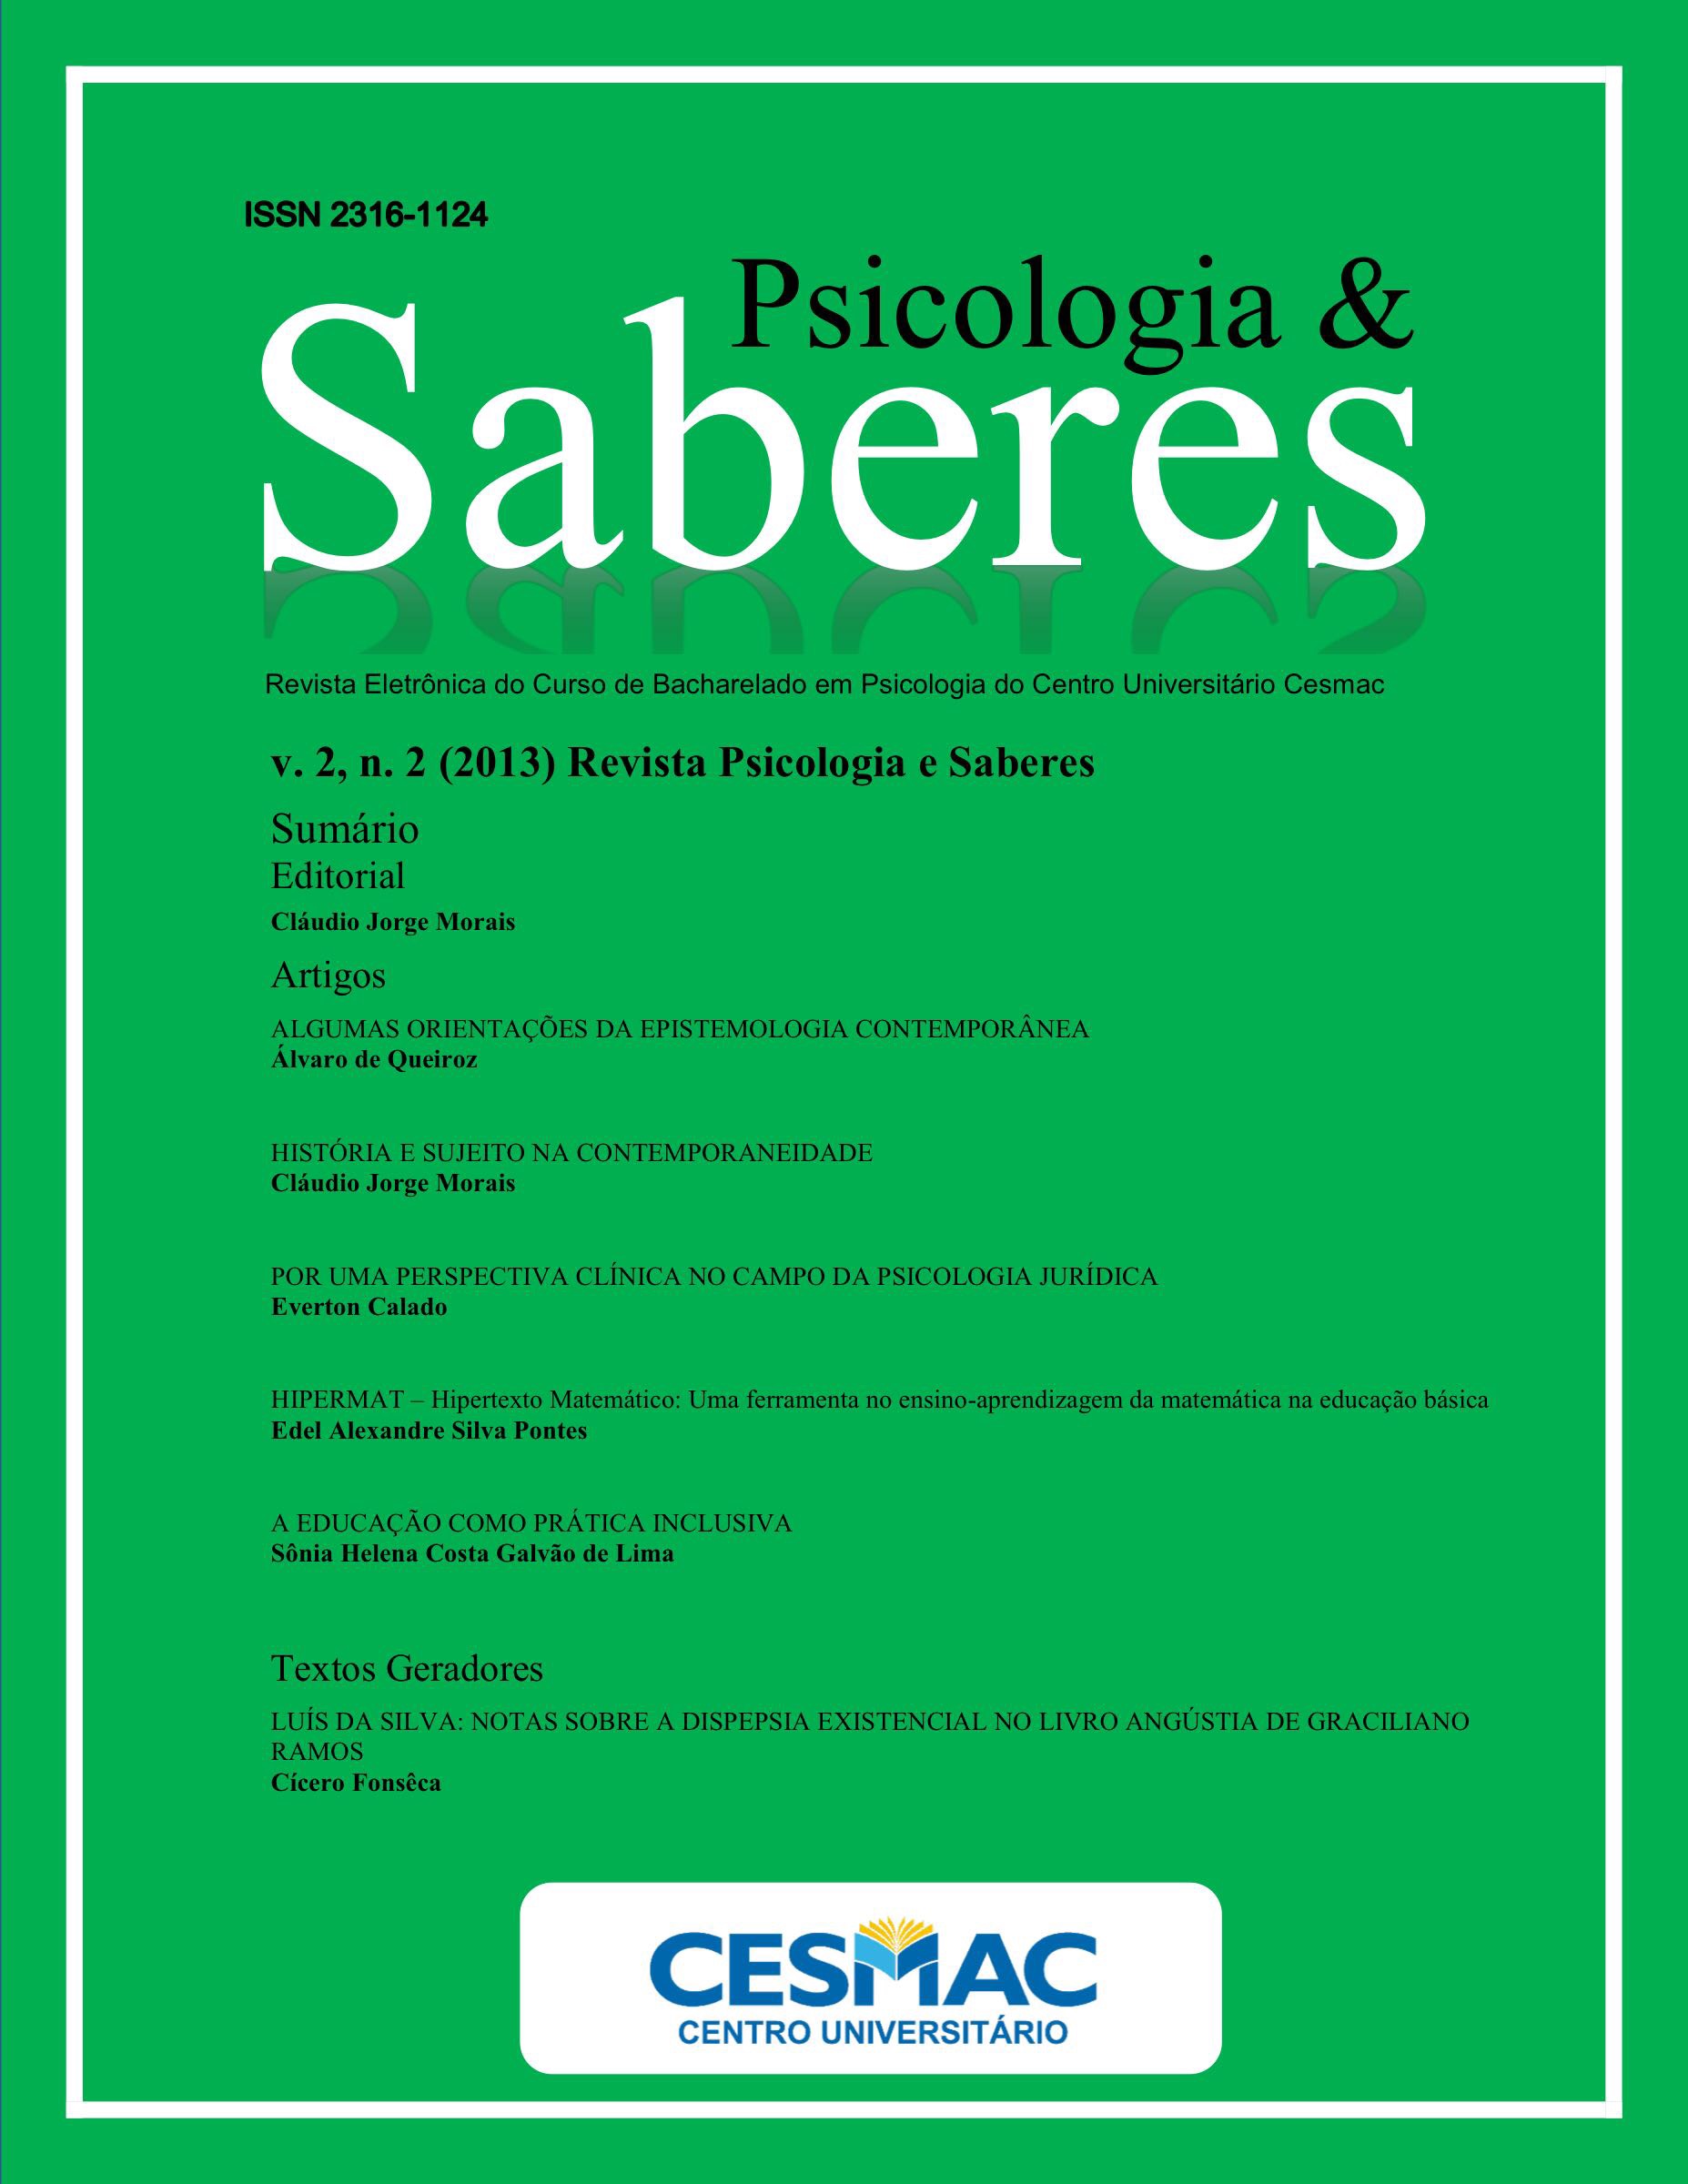 					Visualizar v. 2 n. 2 (2013): Revista Psicologia & Saberes
				